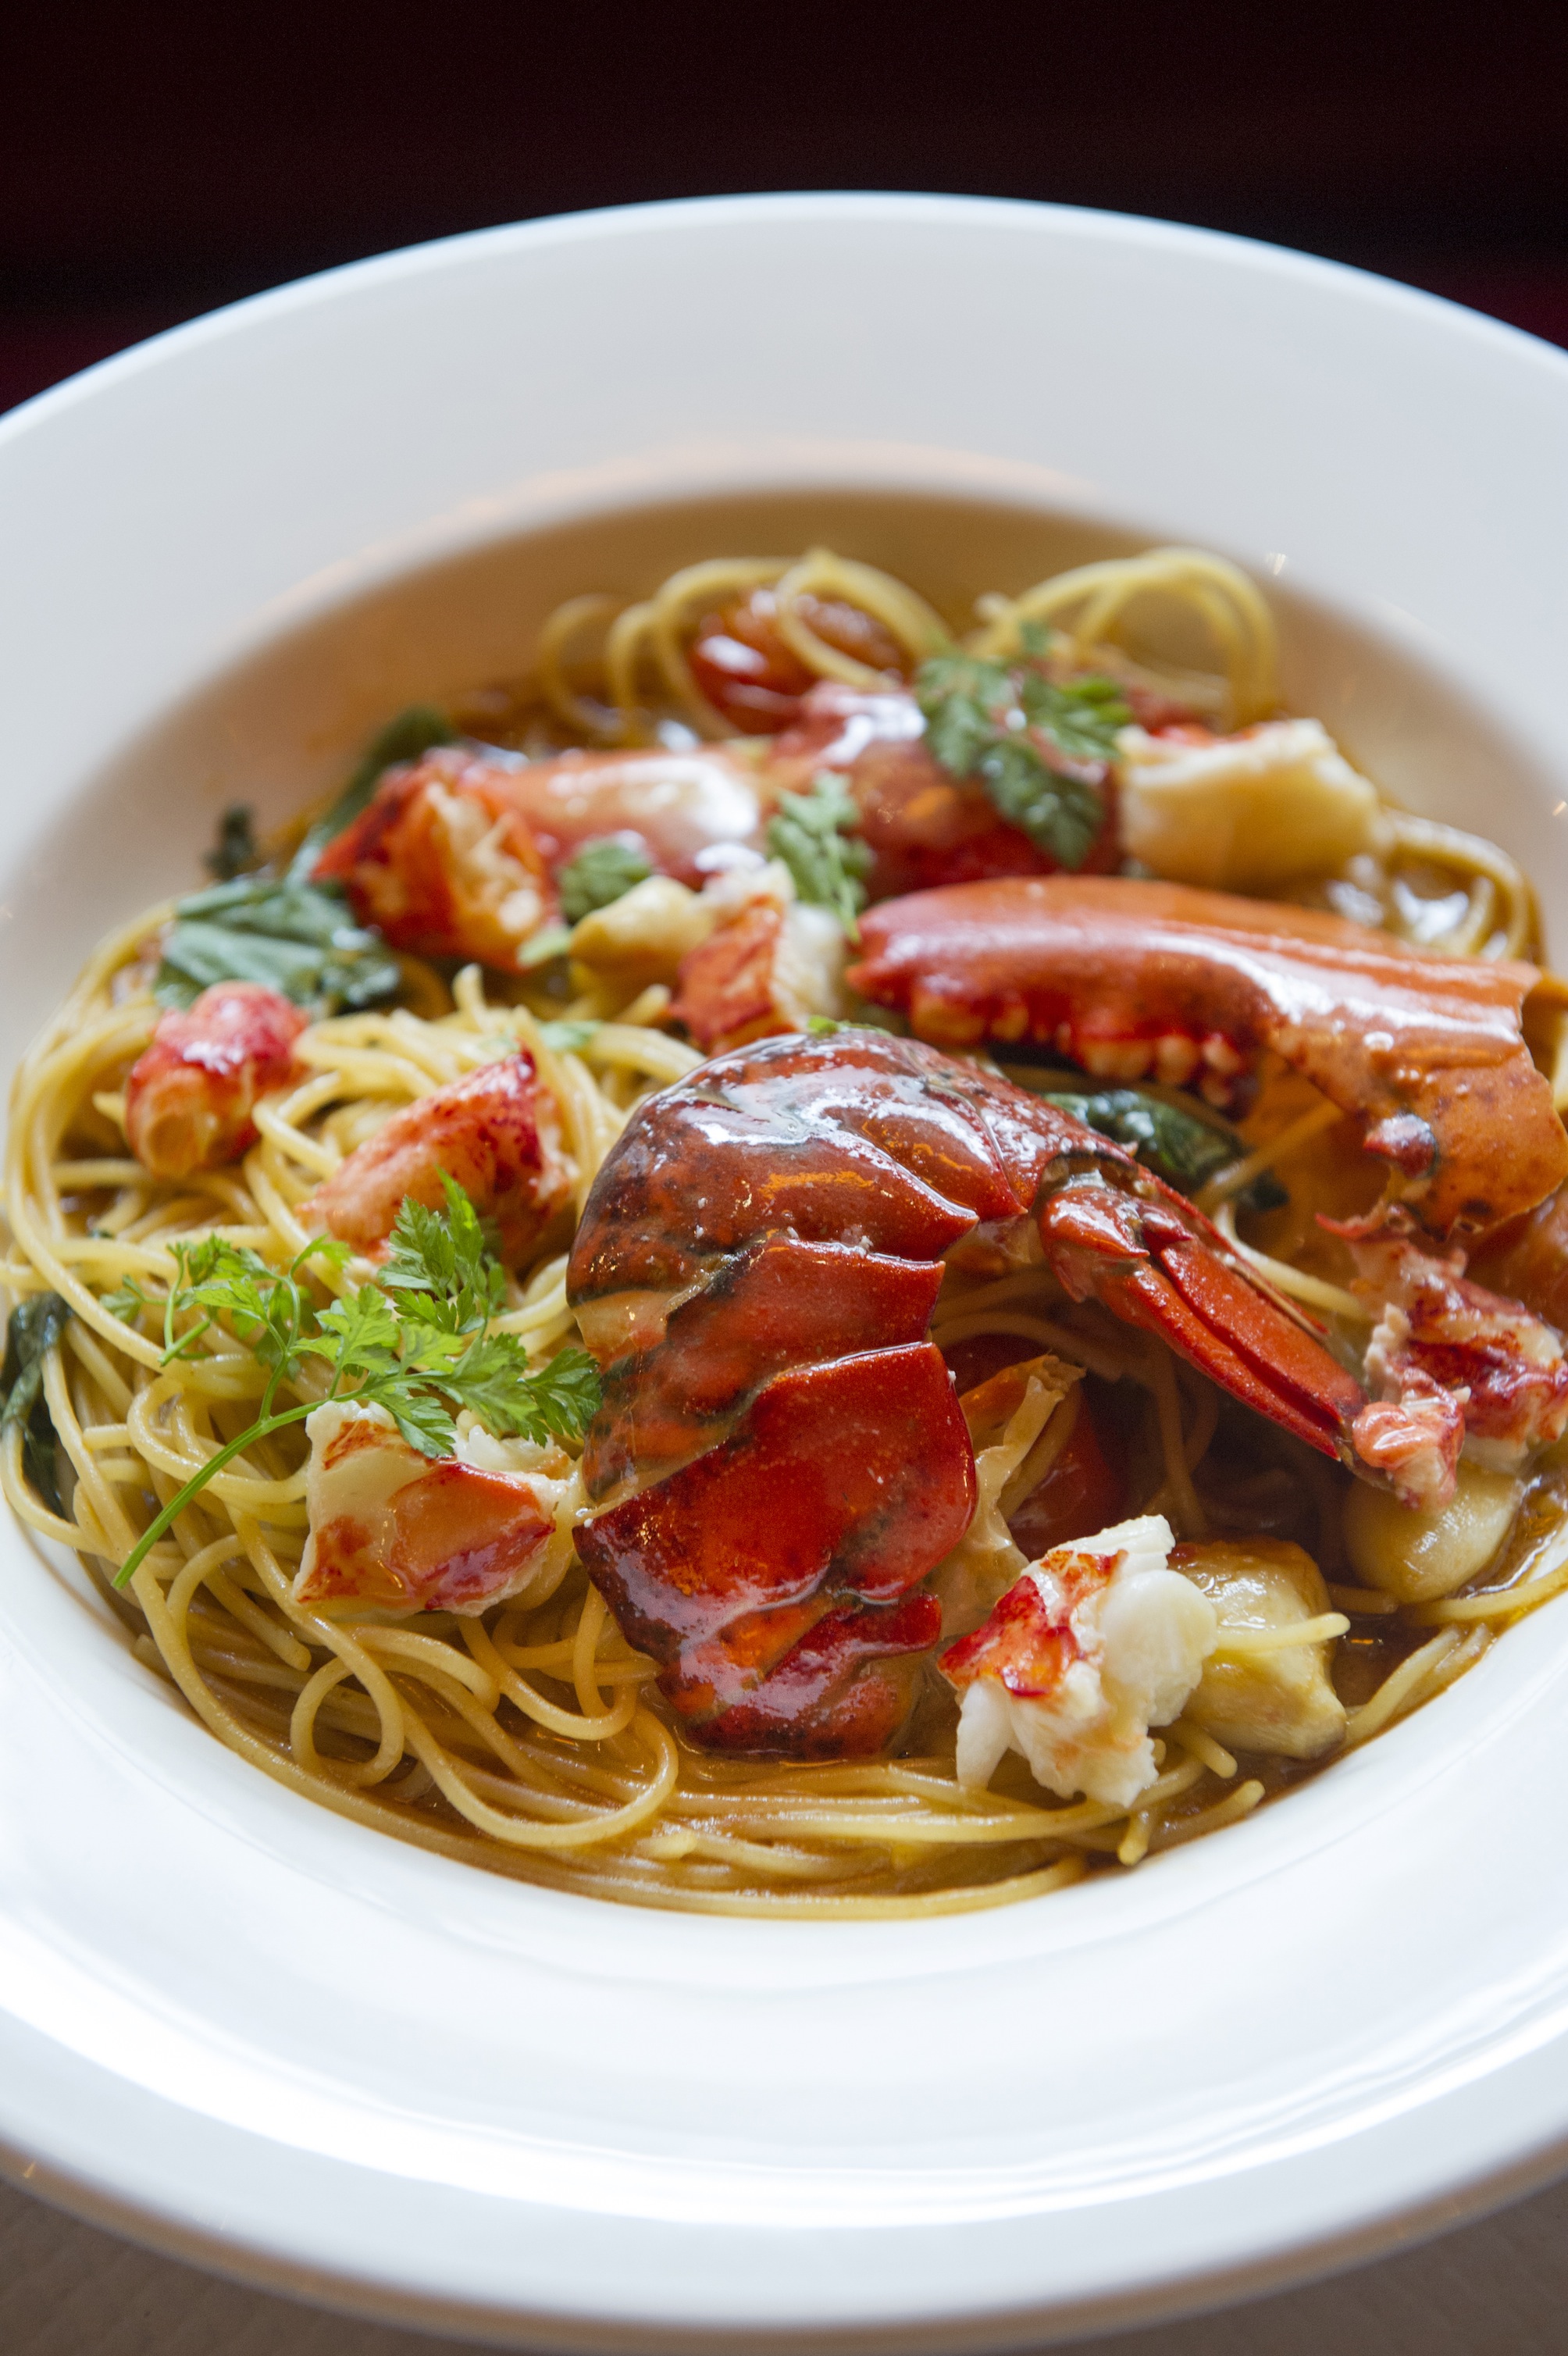 Lobster spaghetti at Balthazr